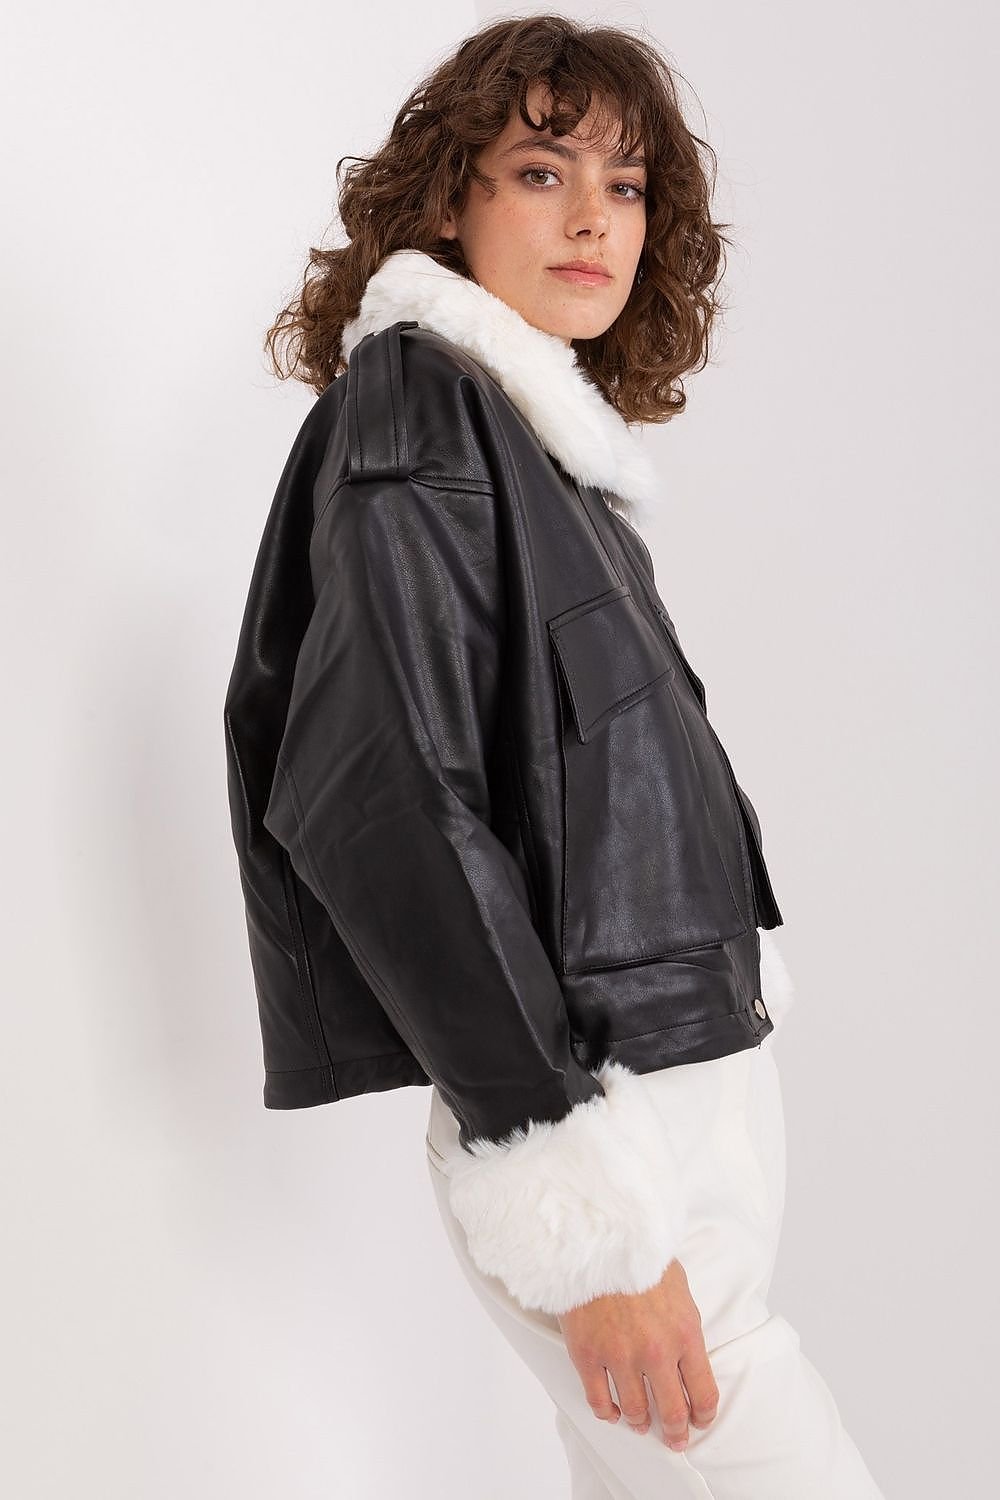 Lined eco leather jacket